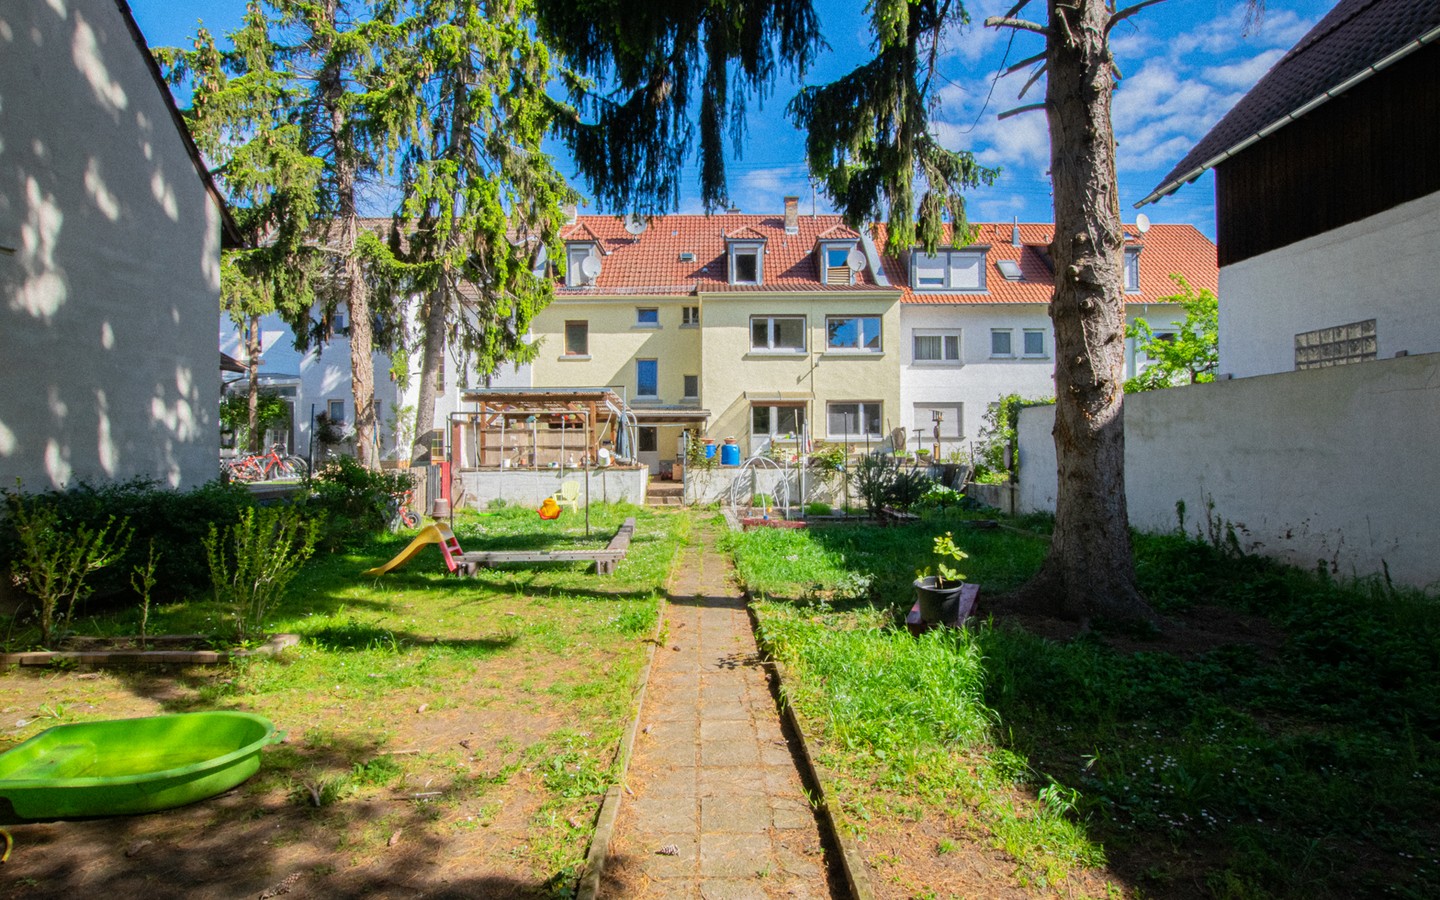 Garten - Perfekt als Mehrgenerationendomizil: 4-Familienhaus mit viel Potenzial in HD-Kirchheim